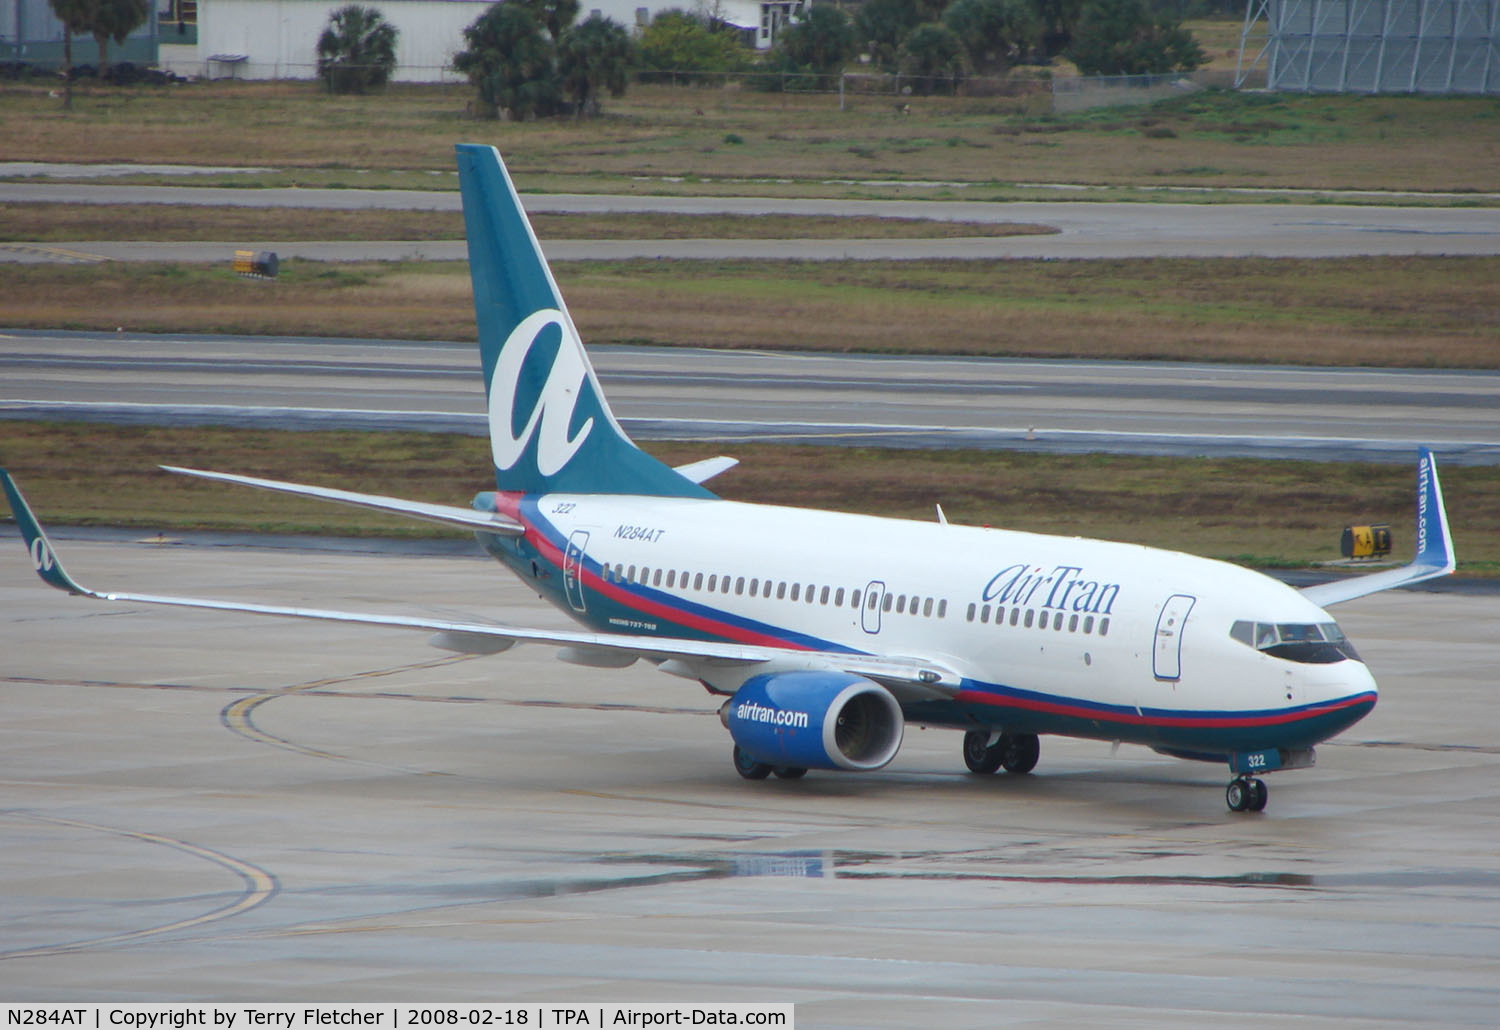 N284AT, 2006 Boeing 737-76N C/N 32668, Air Tran B737 taxies on to stand at Tampa